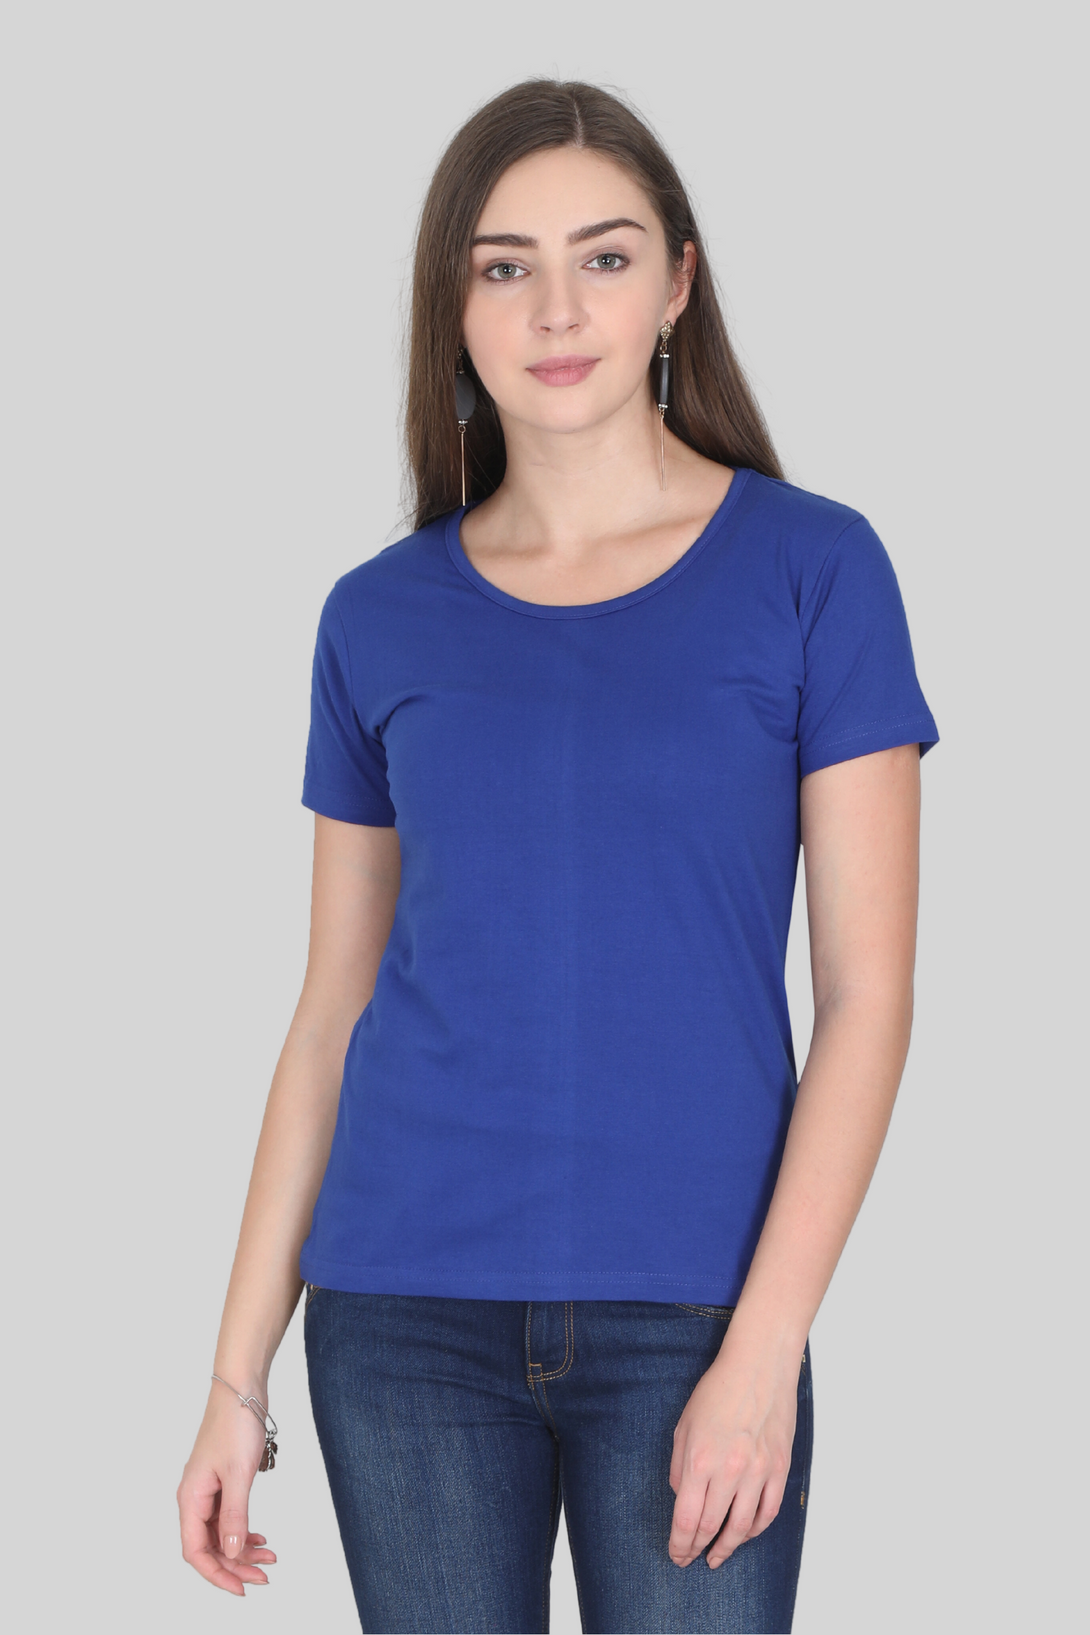 Royal Blue Scoop Neck T-Shirt For Women - WowWaves - 4